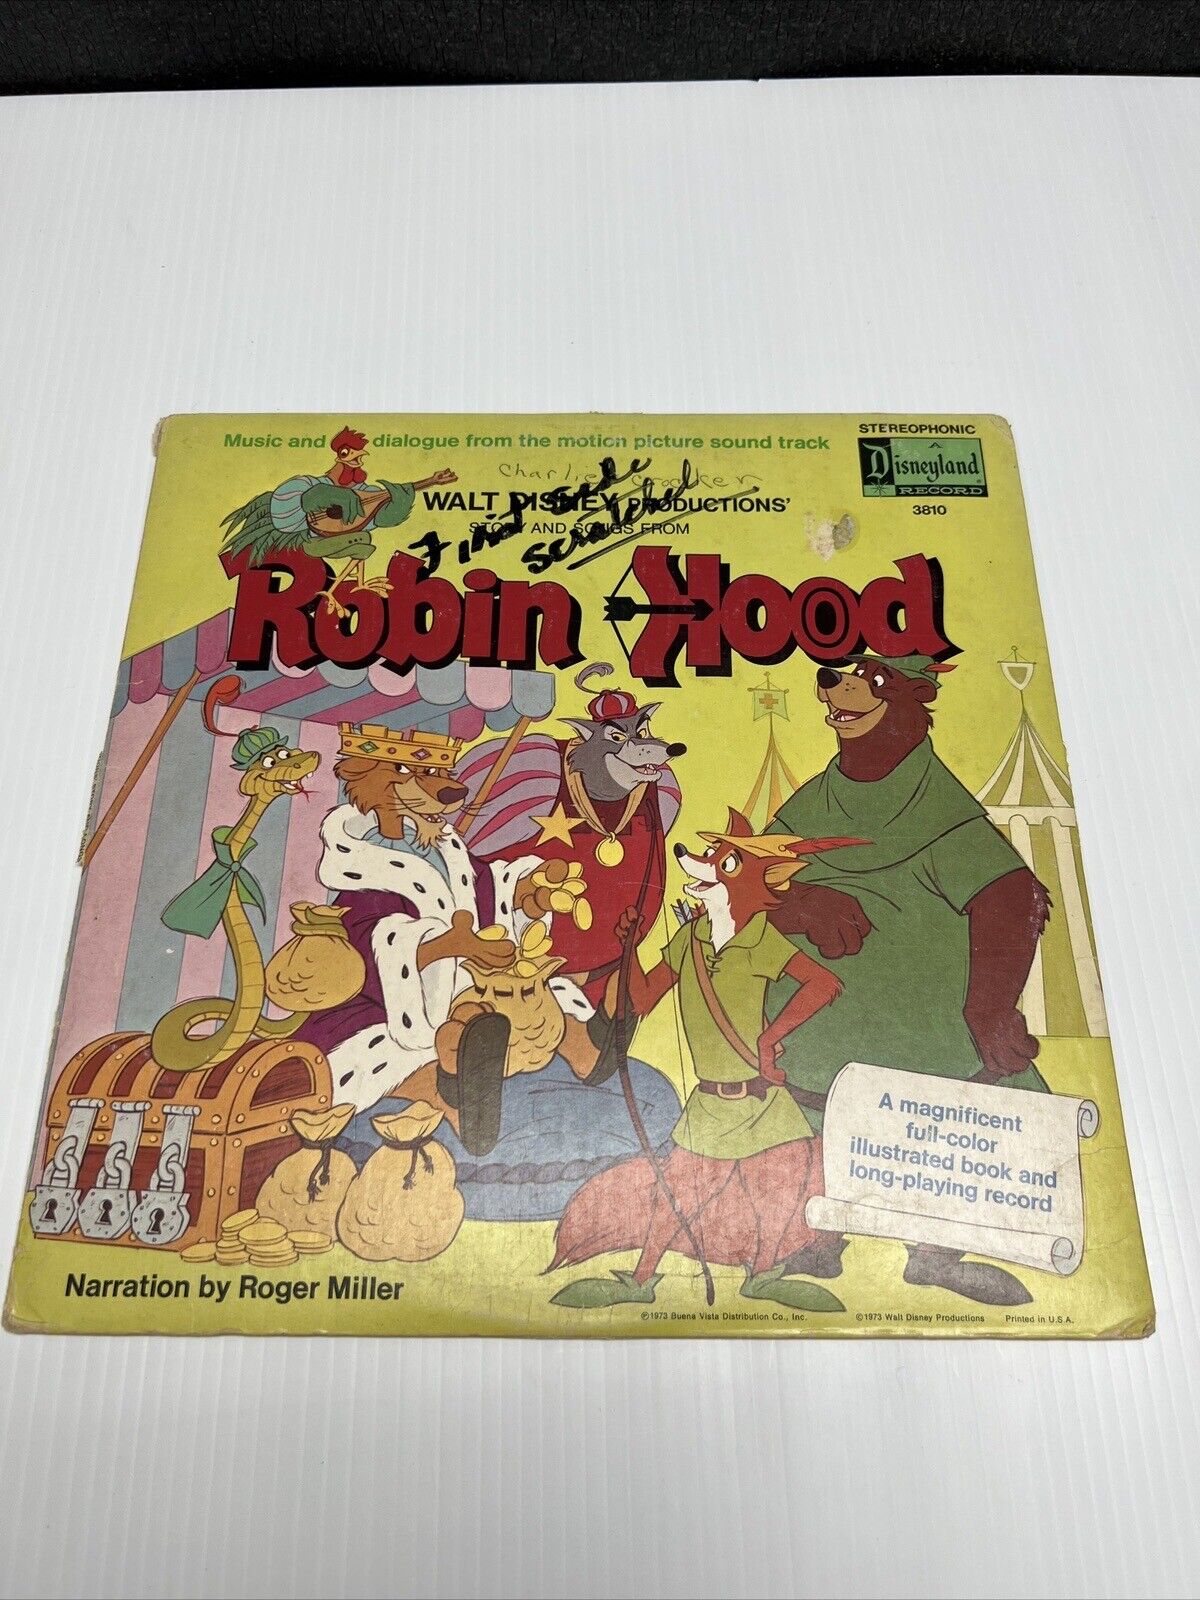 Rare 1973 Disneyland Records Robin Hood Story Book #3810 Disney Vinyl album LP